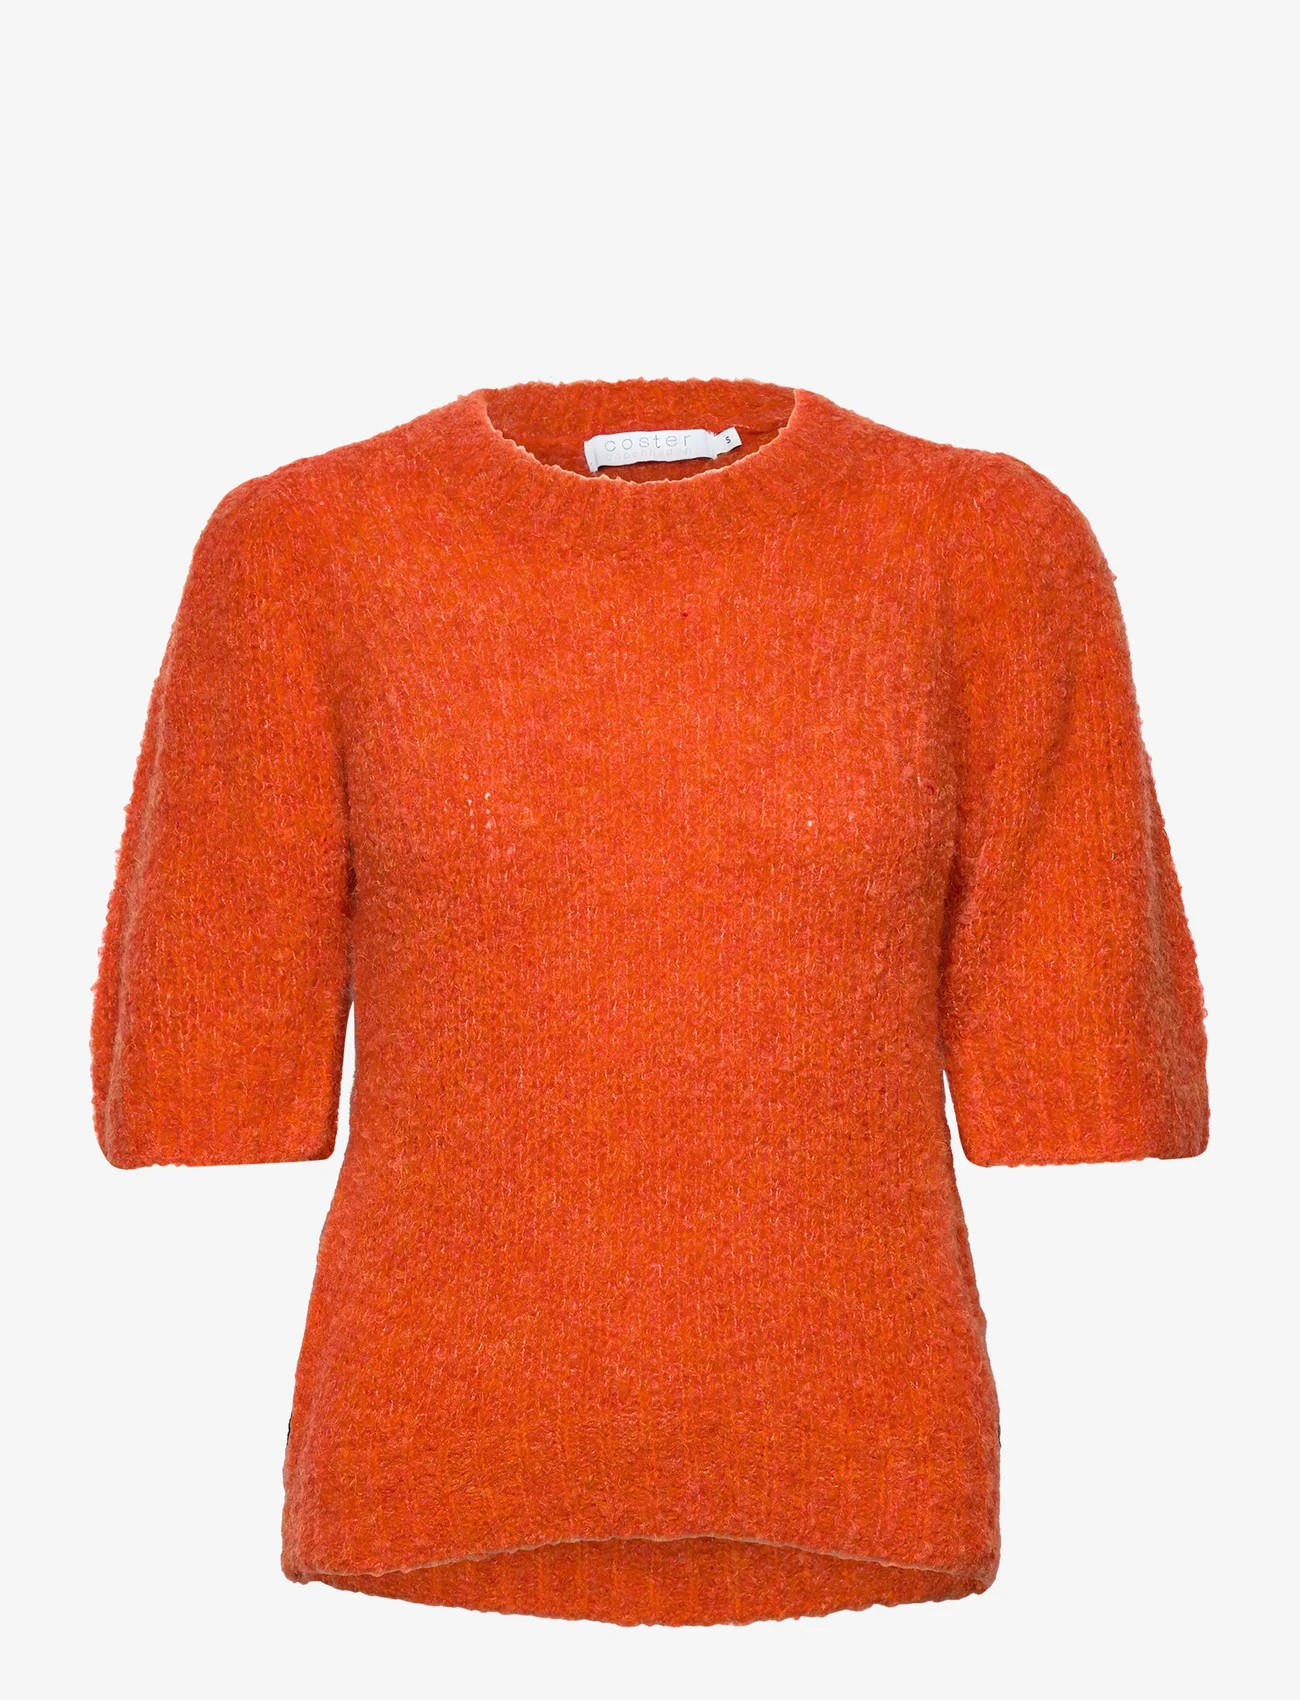 Coster Copenhagen - Knit with puff sleeves - orange melange - 0